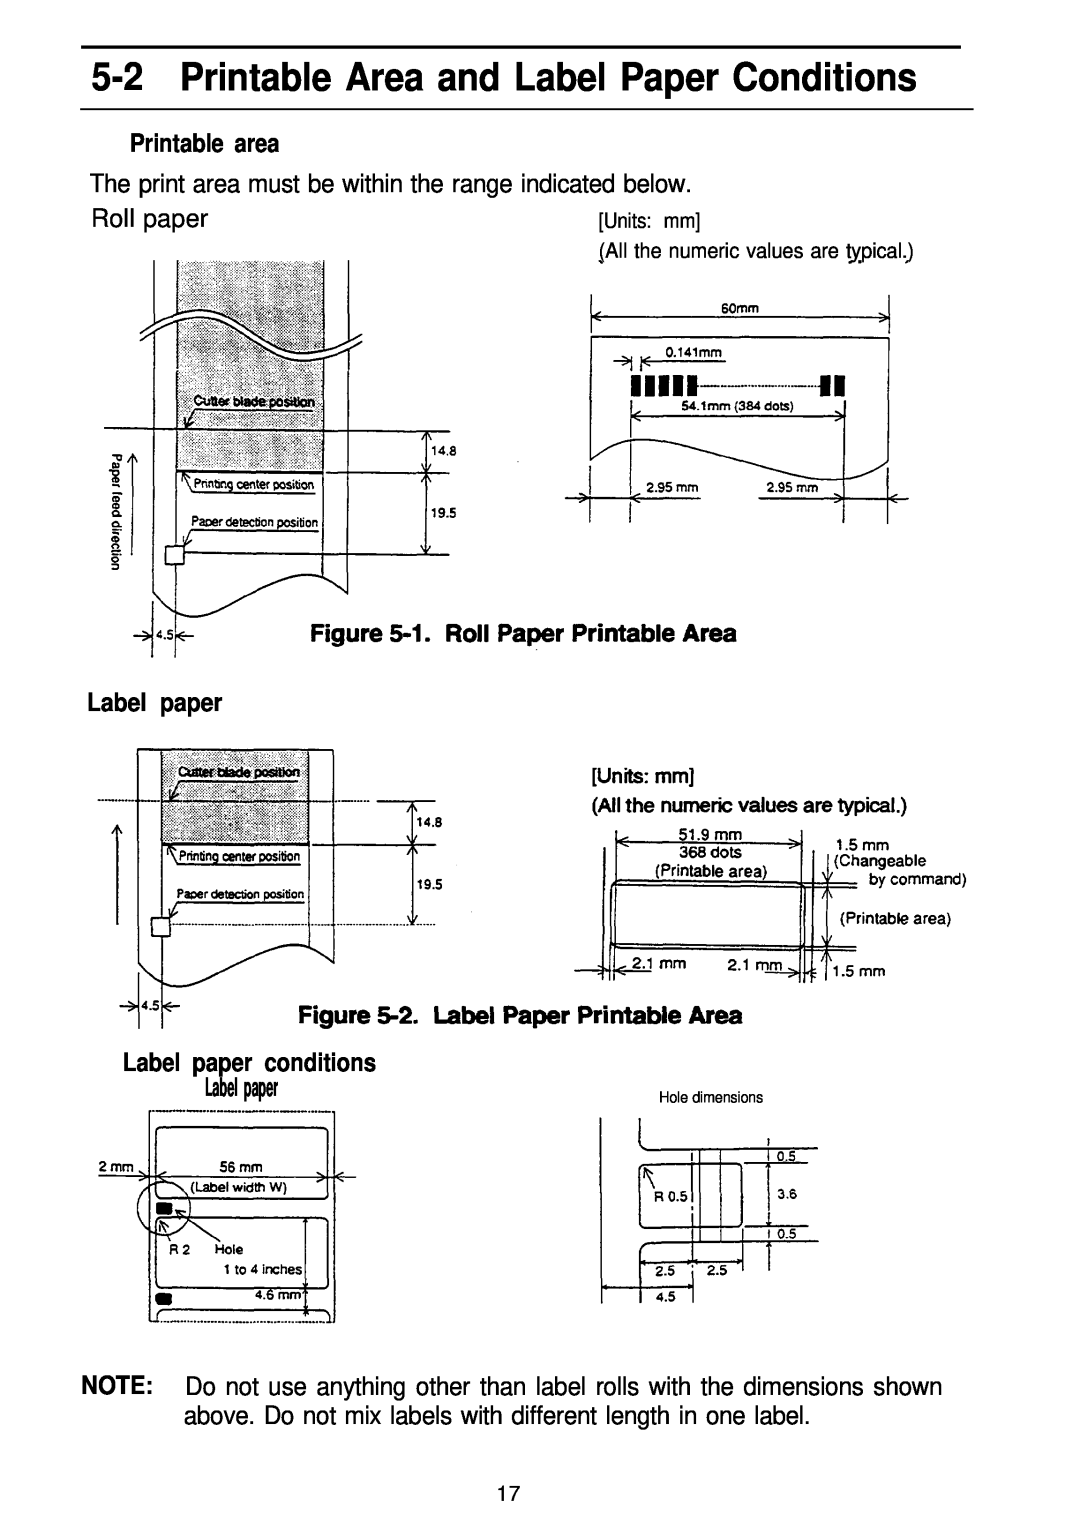 Seiko Group TM-L60 manual Printable Area and Label Paper Conditions, n Printable area, Label paper, Hole dimensions 